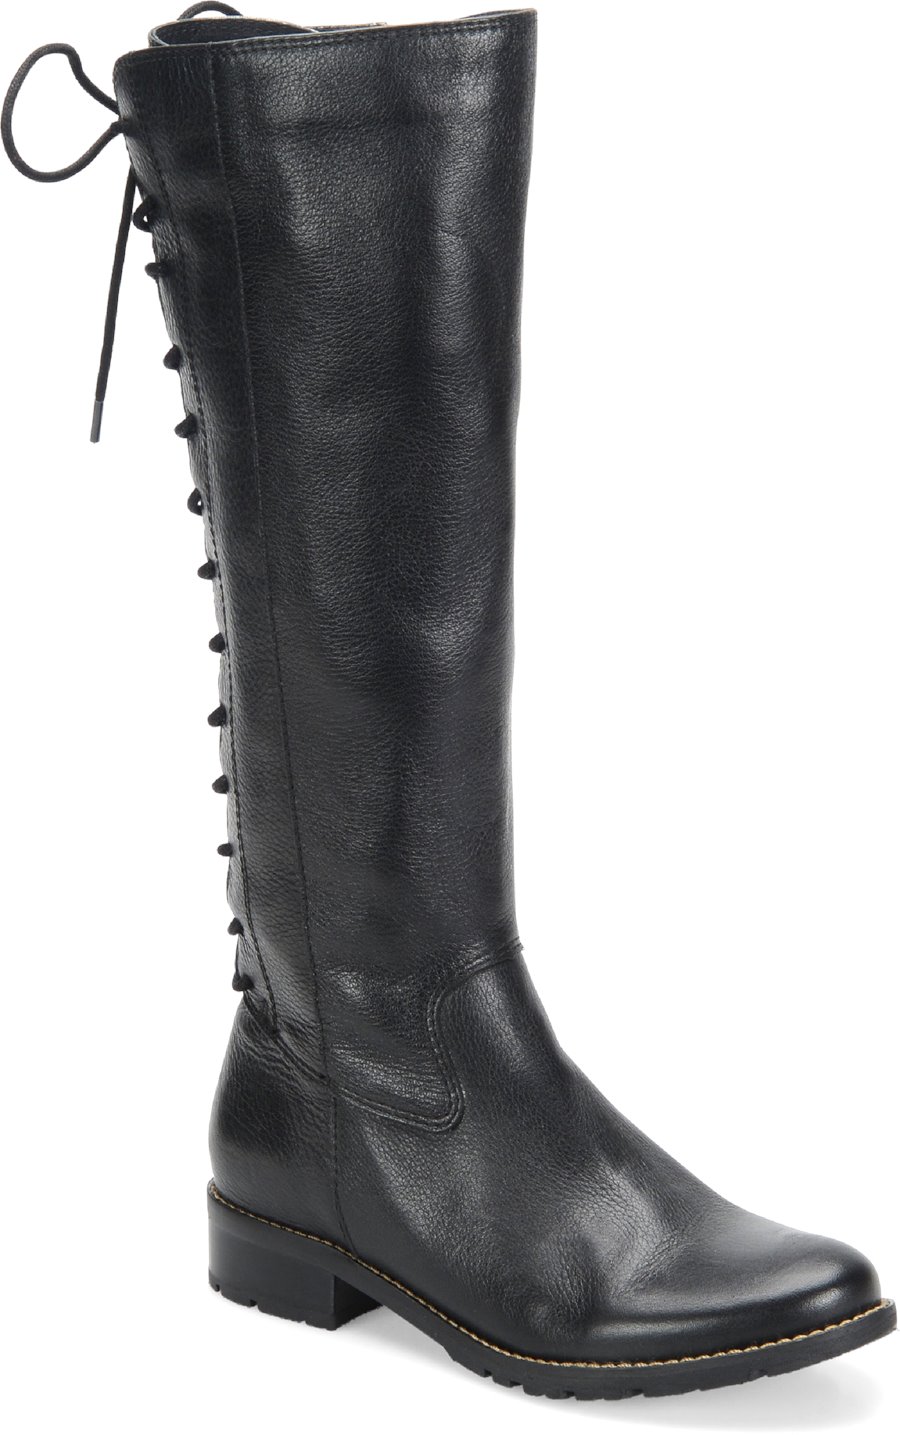 Sofft Shoes - Sofft Sharnell Women's Shoes in Black color. - #sofftshoes #blackshoes